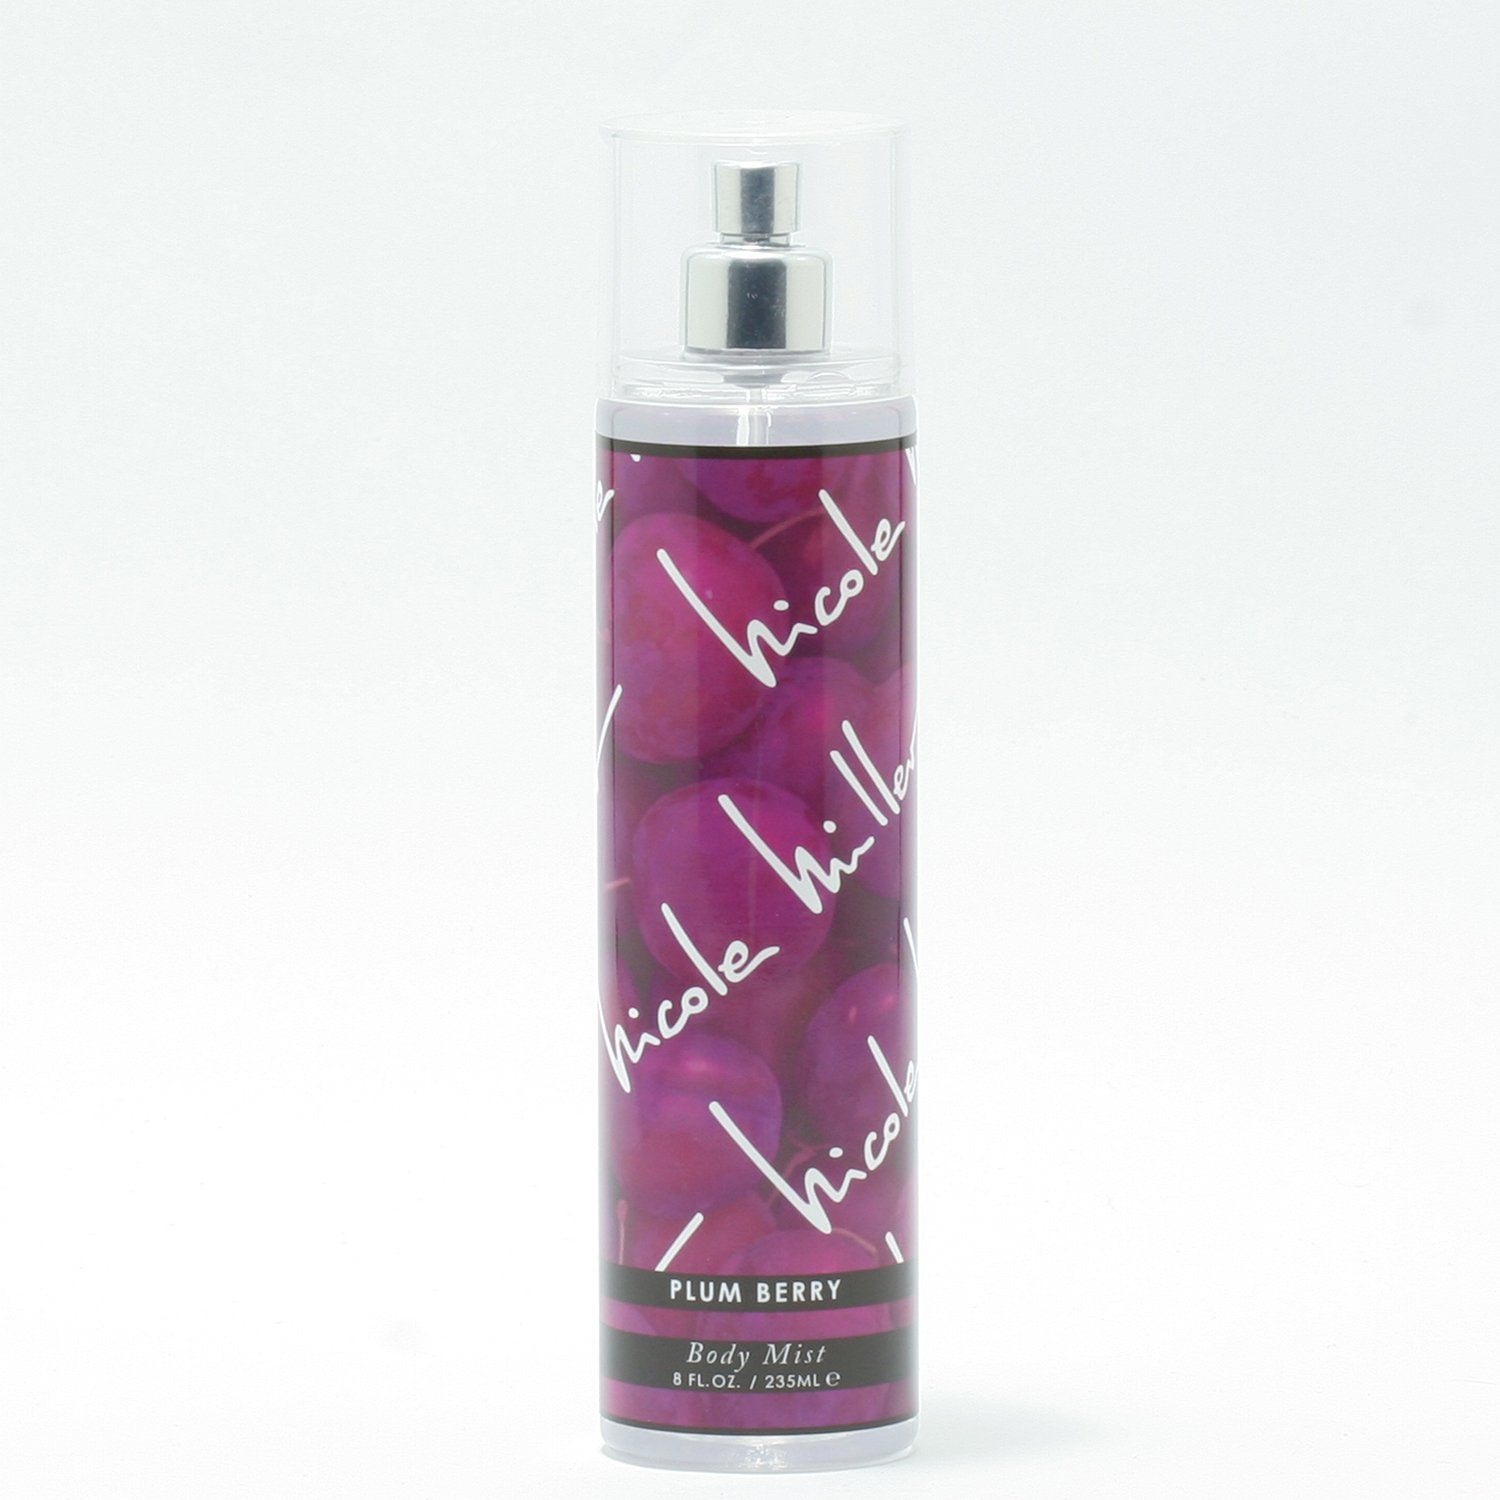 Perfume - NICOLE MILLER PLUM BERRY FOR WOMEN - BODY SPRAY, 8.0 OZ